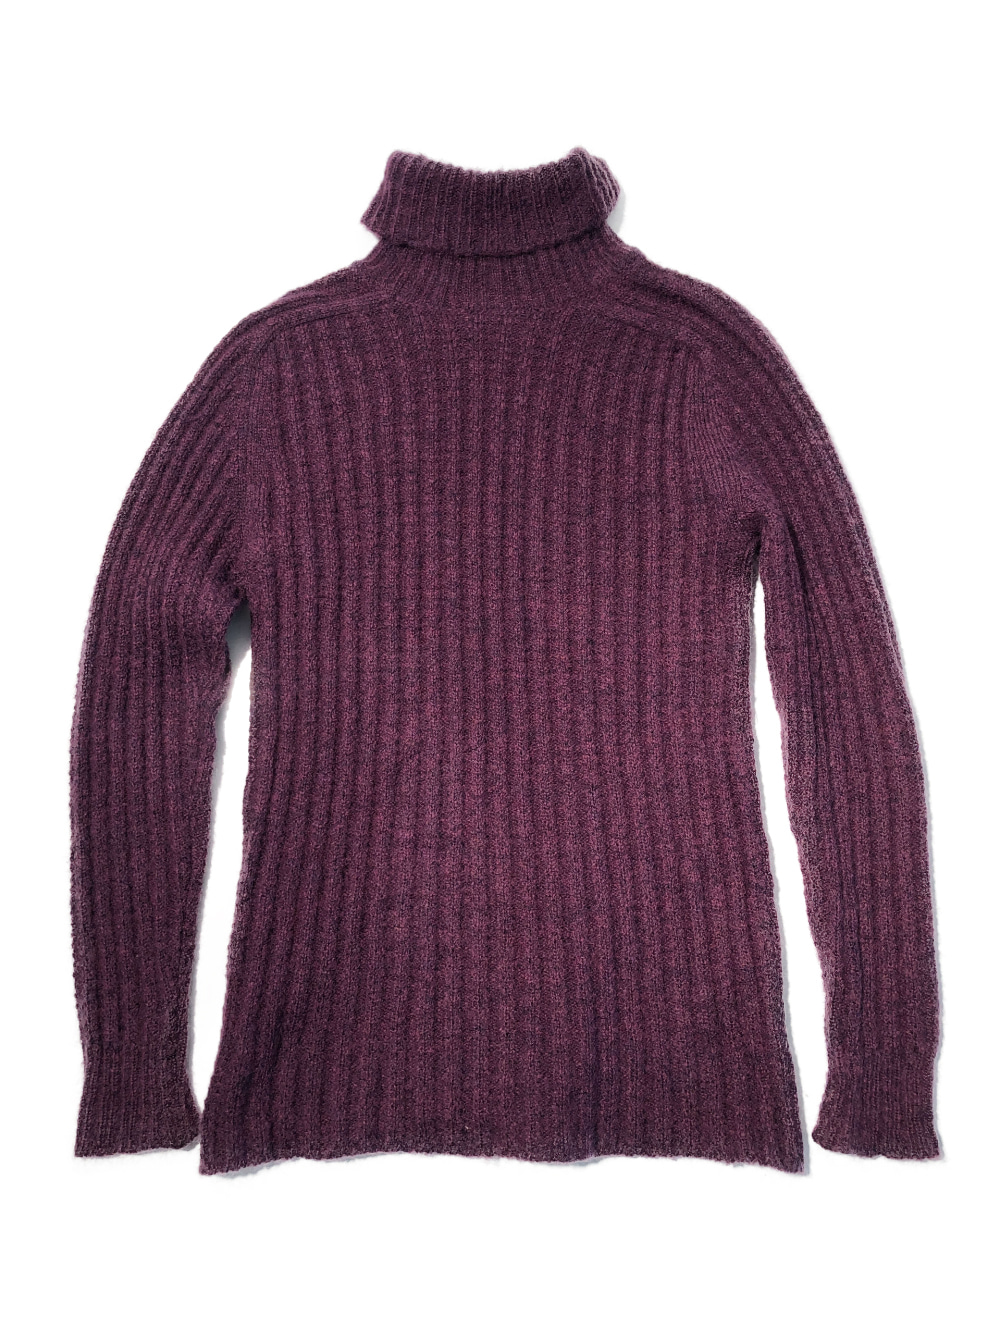 Christophe Lemaire purple sweater